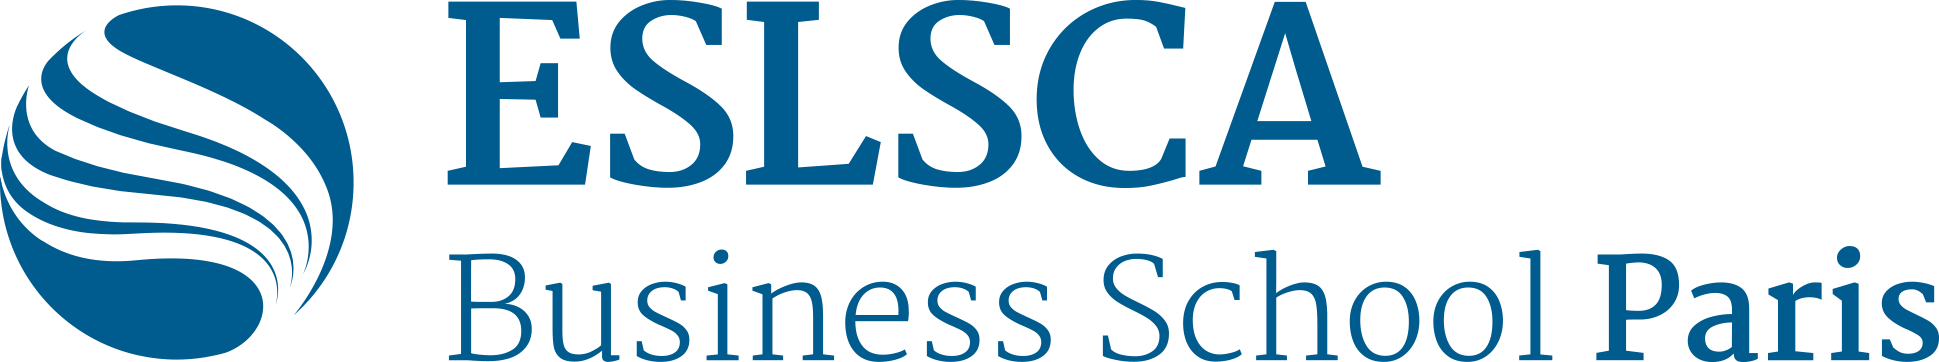 Logo ESLSCA Business School Paris